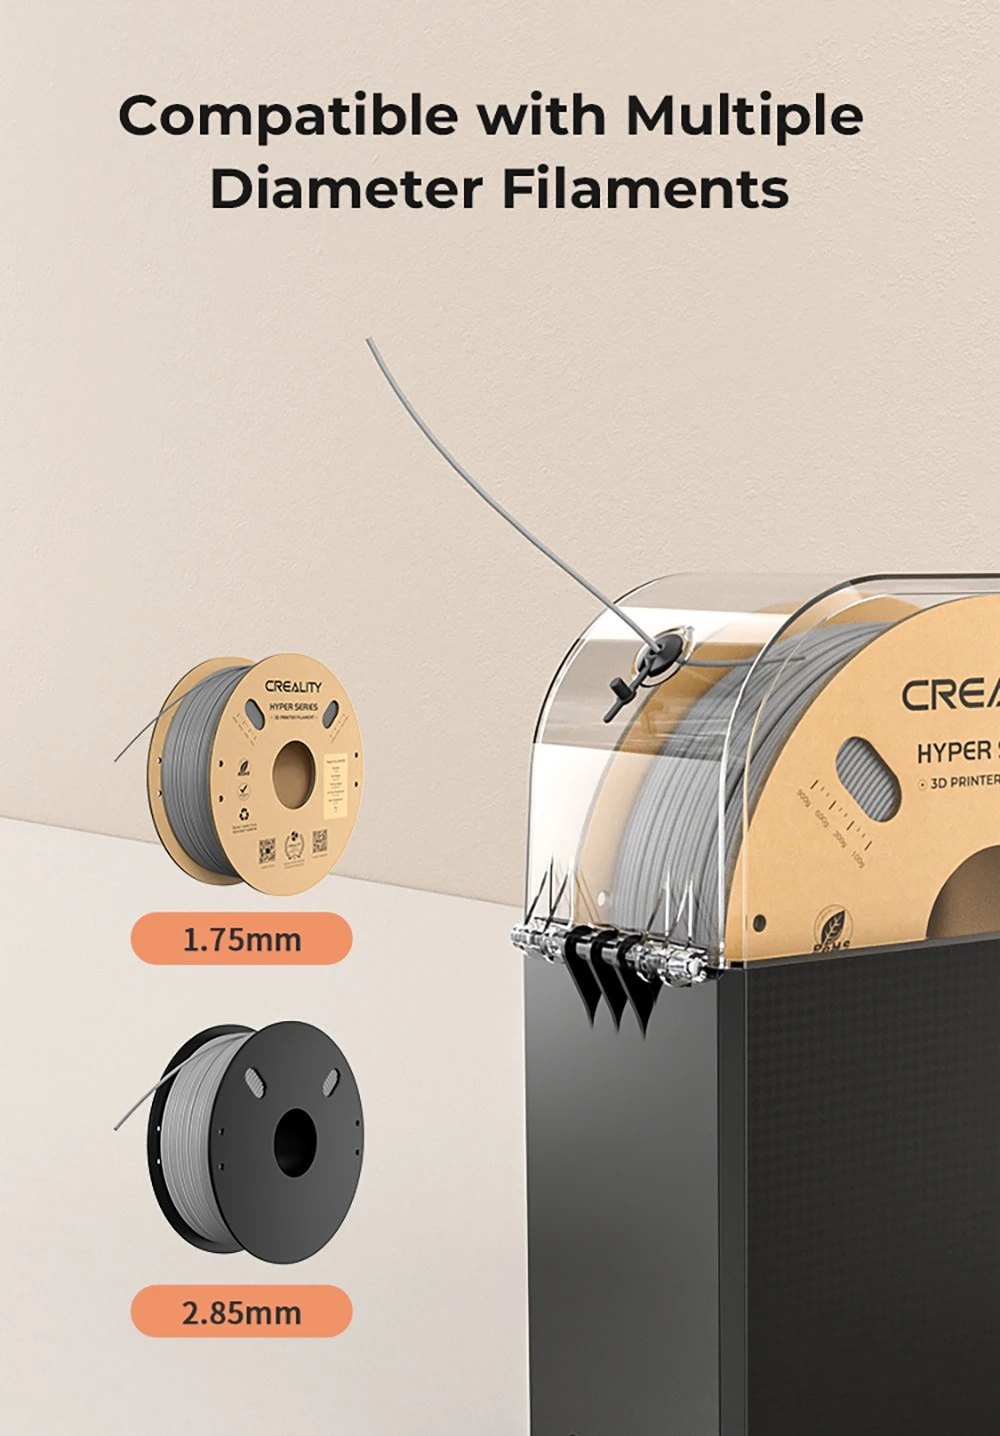 Creality Filament Dryer Box 2.0, Adjustable Temperature, 24h Timer, Humidity Monitoring